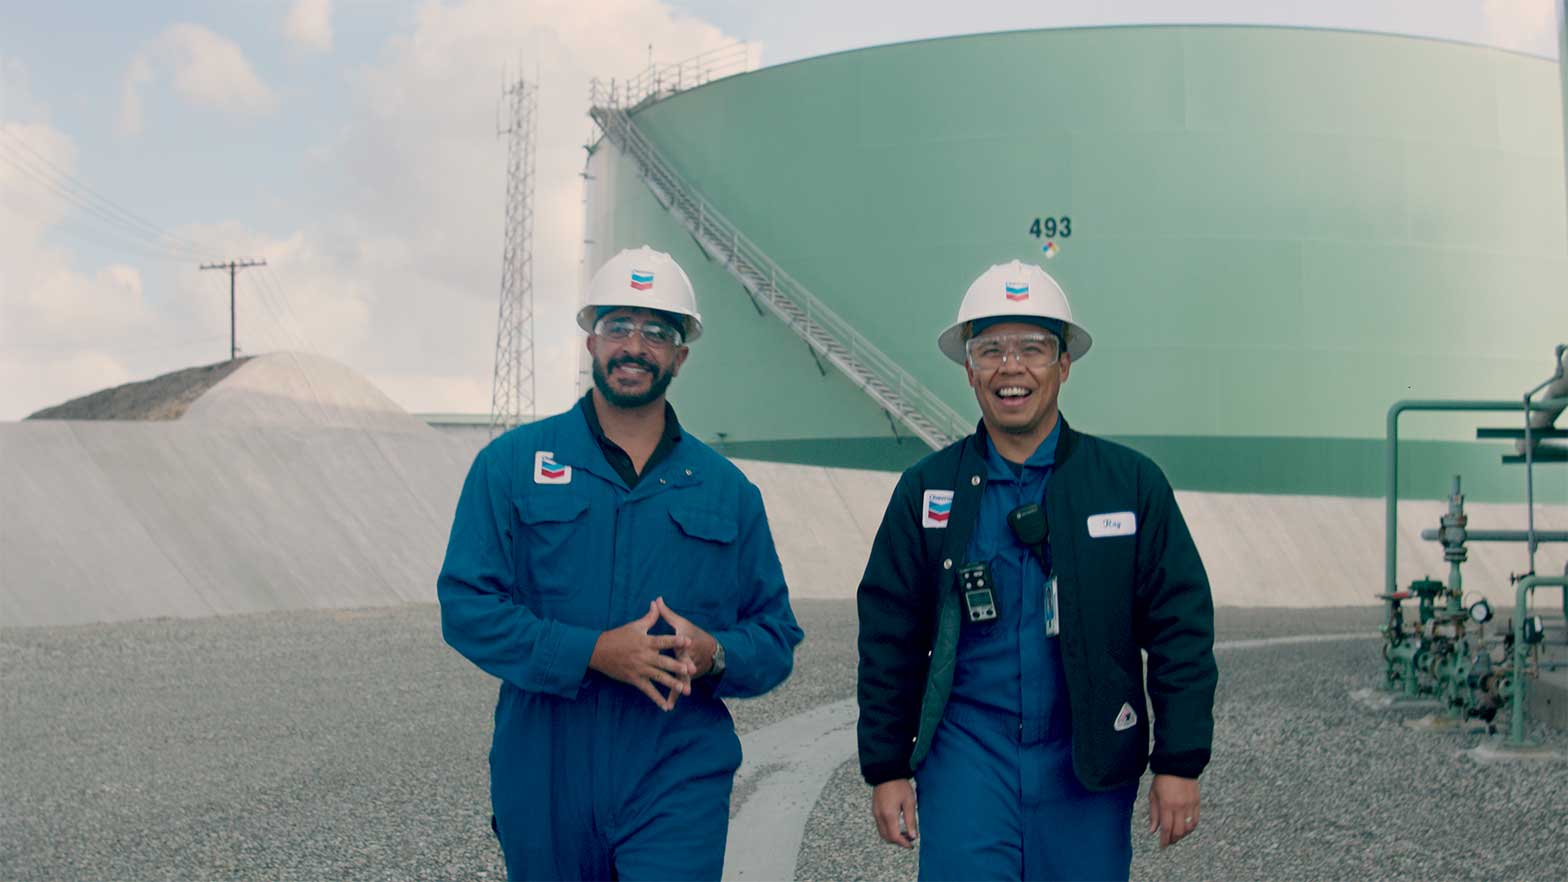 Hasbani (left) walking with Ray Obico near the vegetable oil tank at El Segundo Refinery in California.